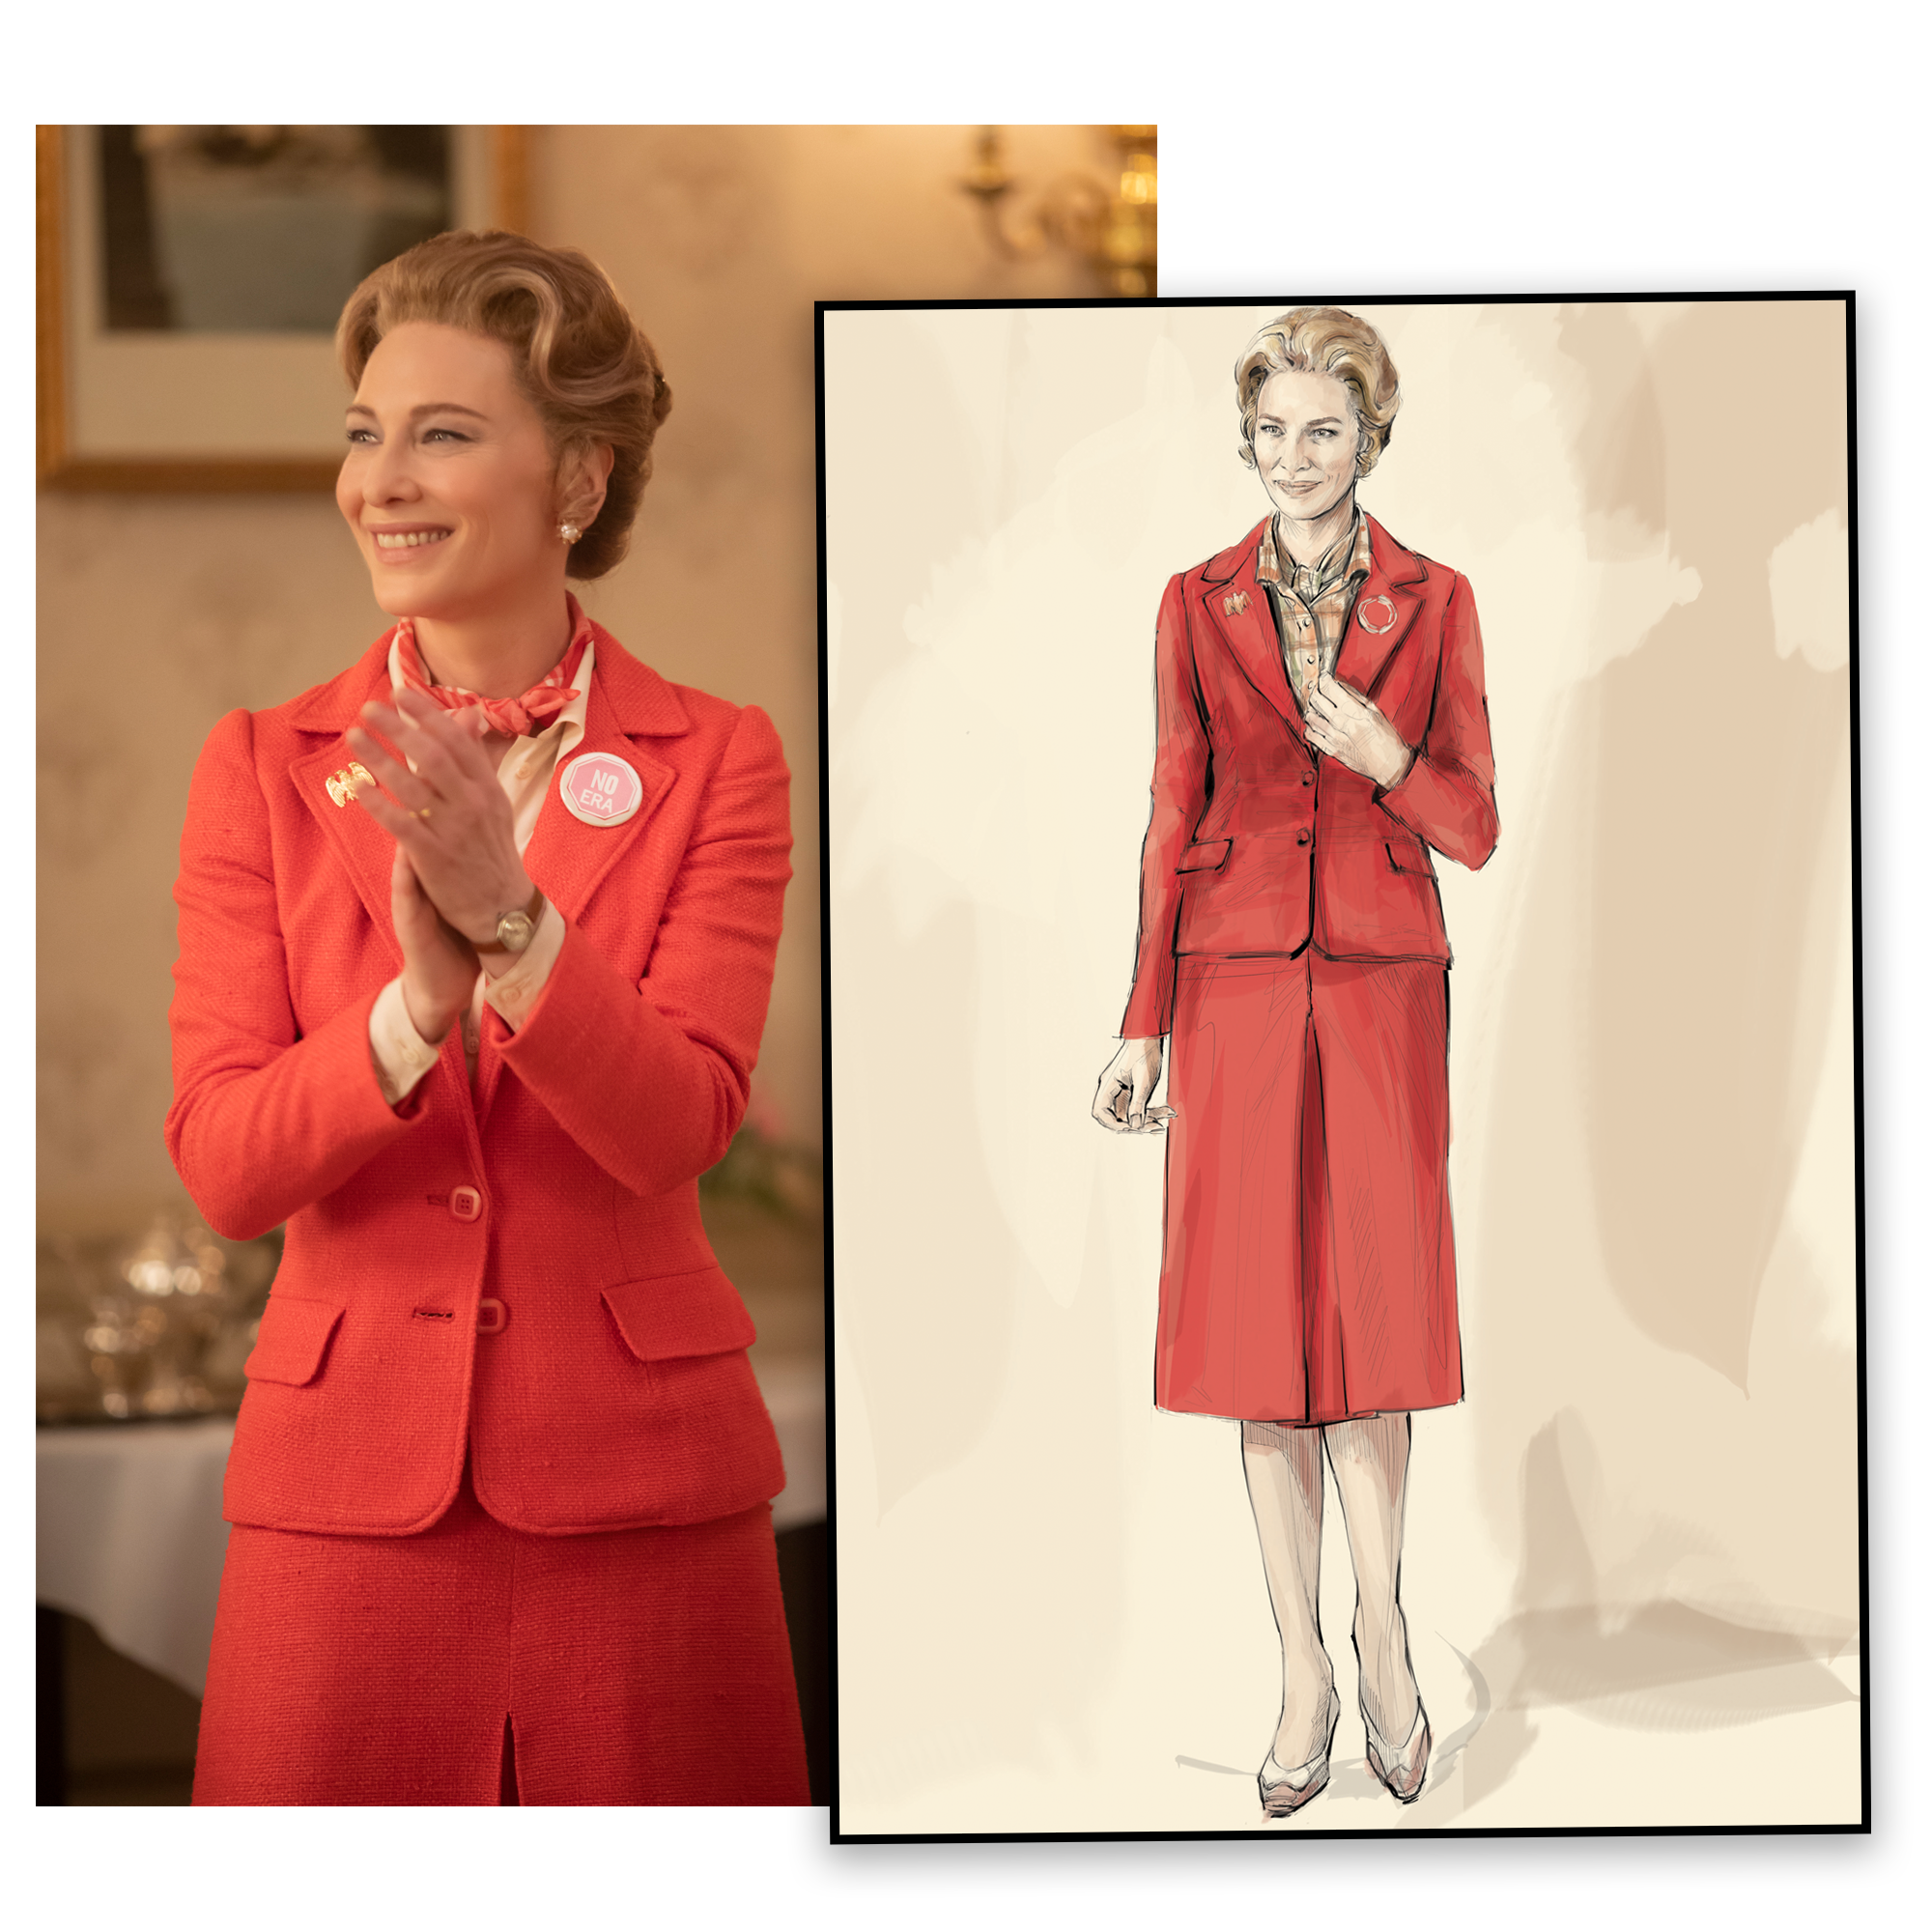 Cate Blanchett In Mrs America 2020 Wallpapers